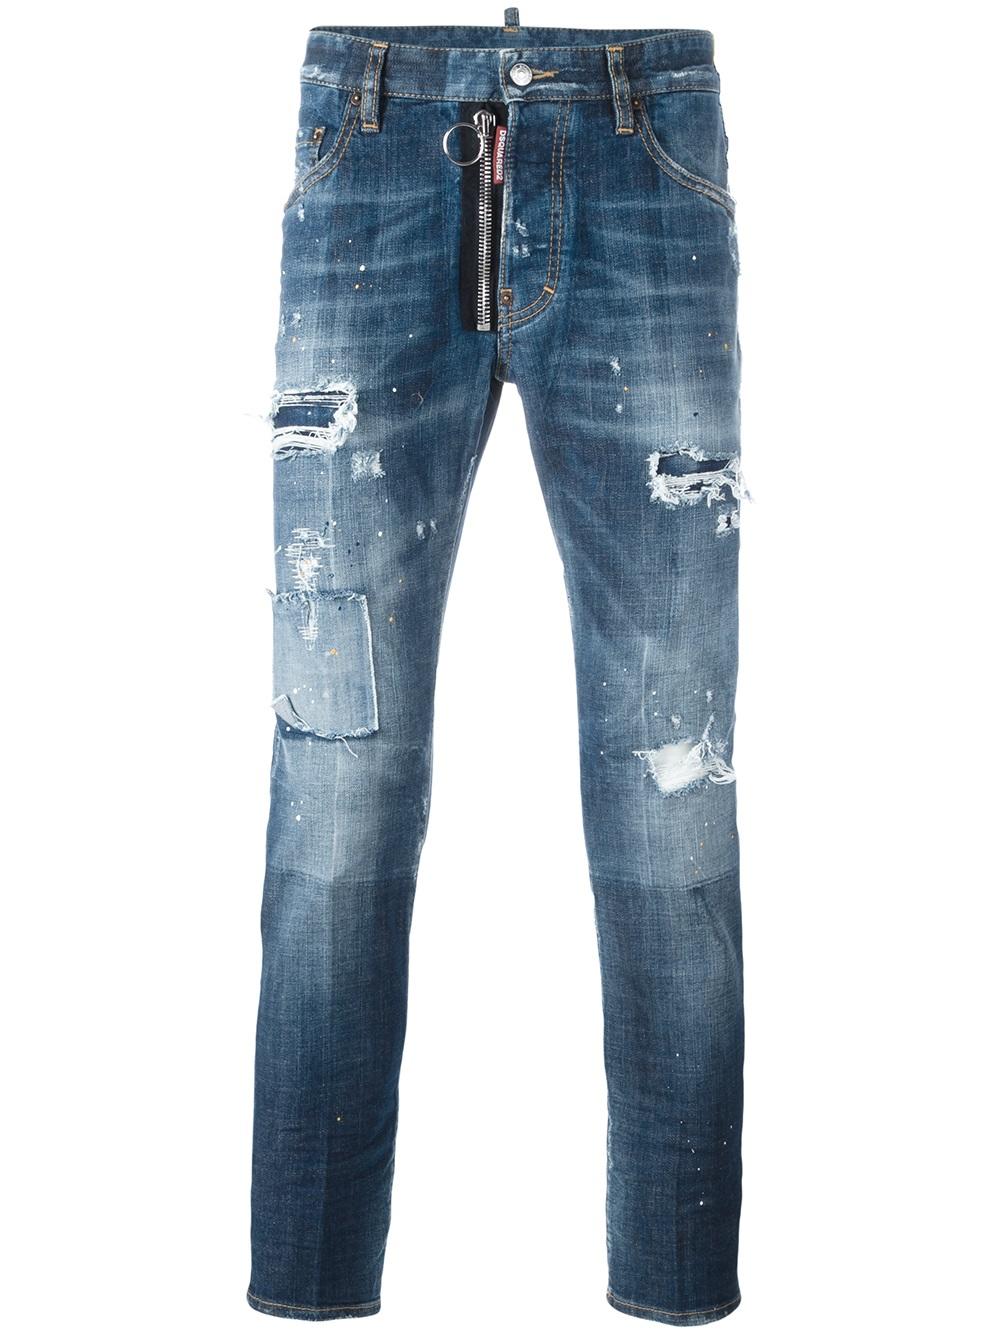 jeans dsquared2 soldes